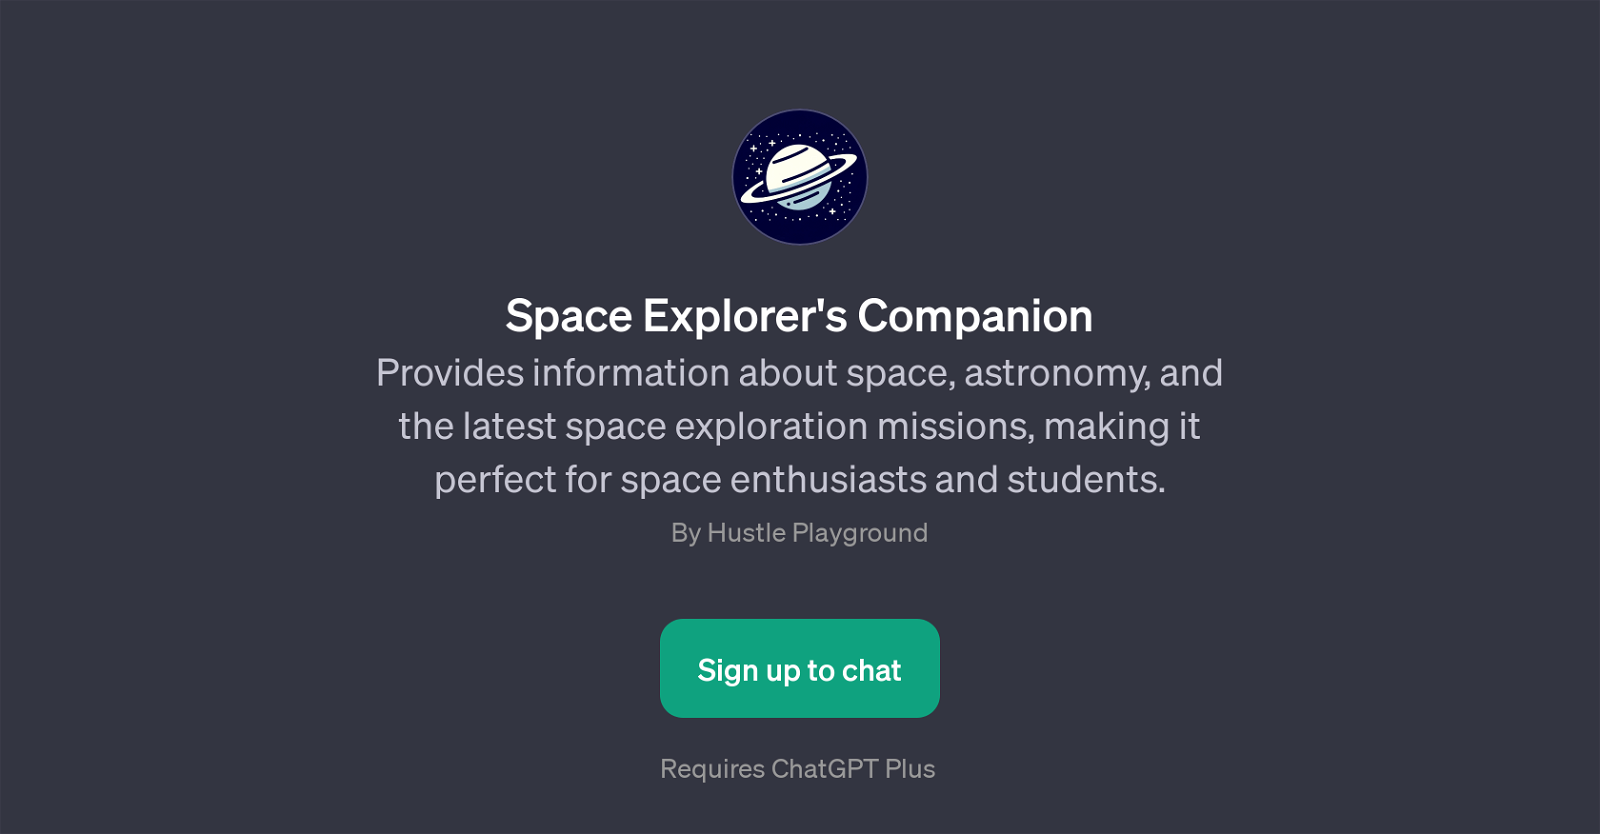 Space Explorer's Companion website